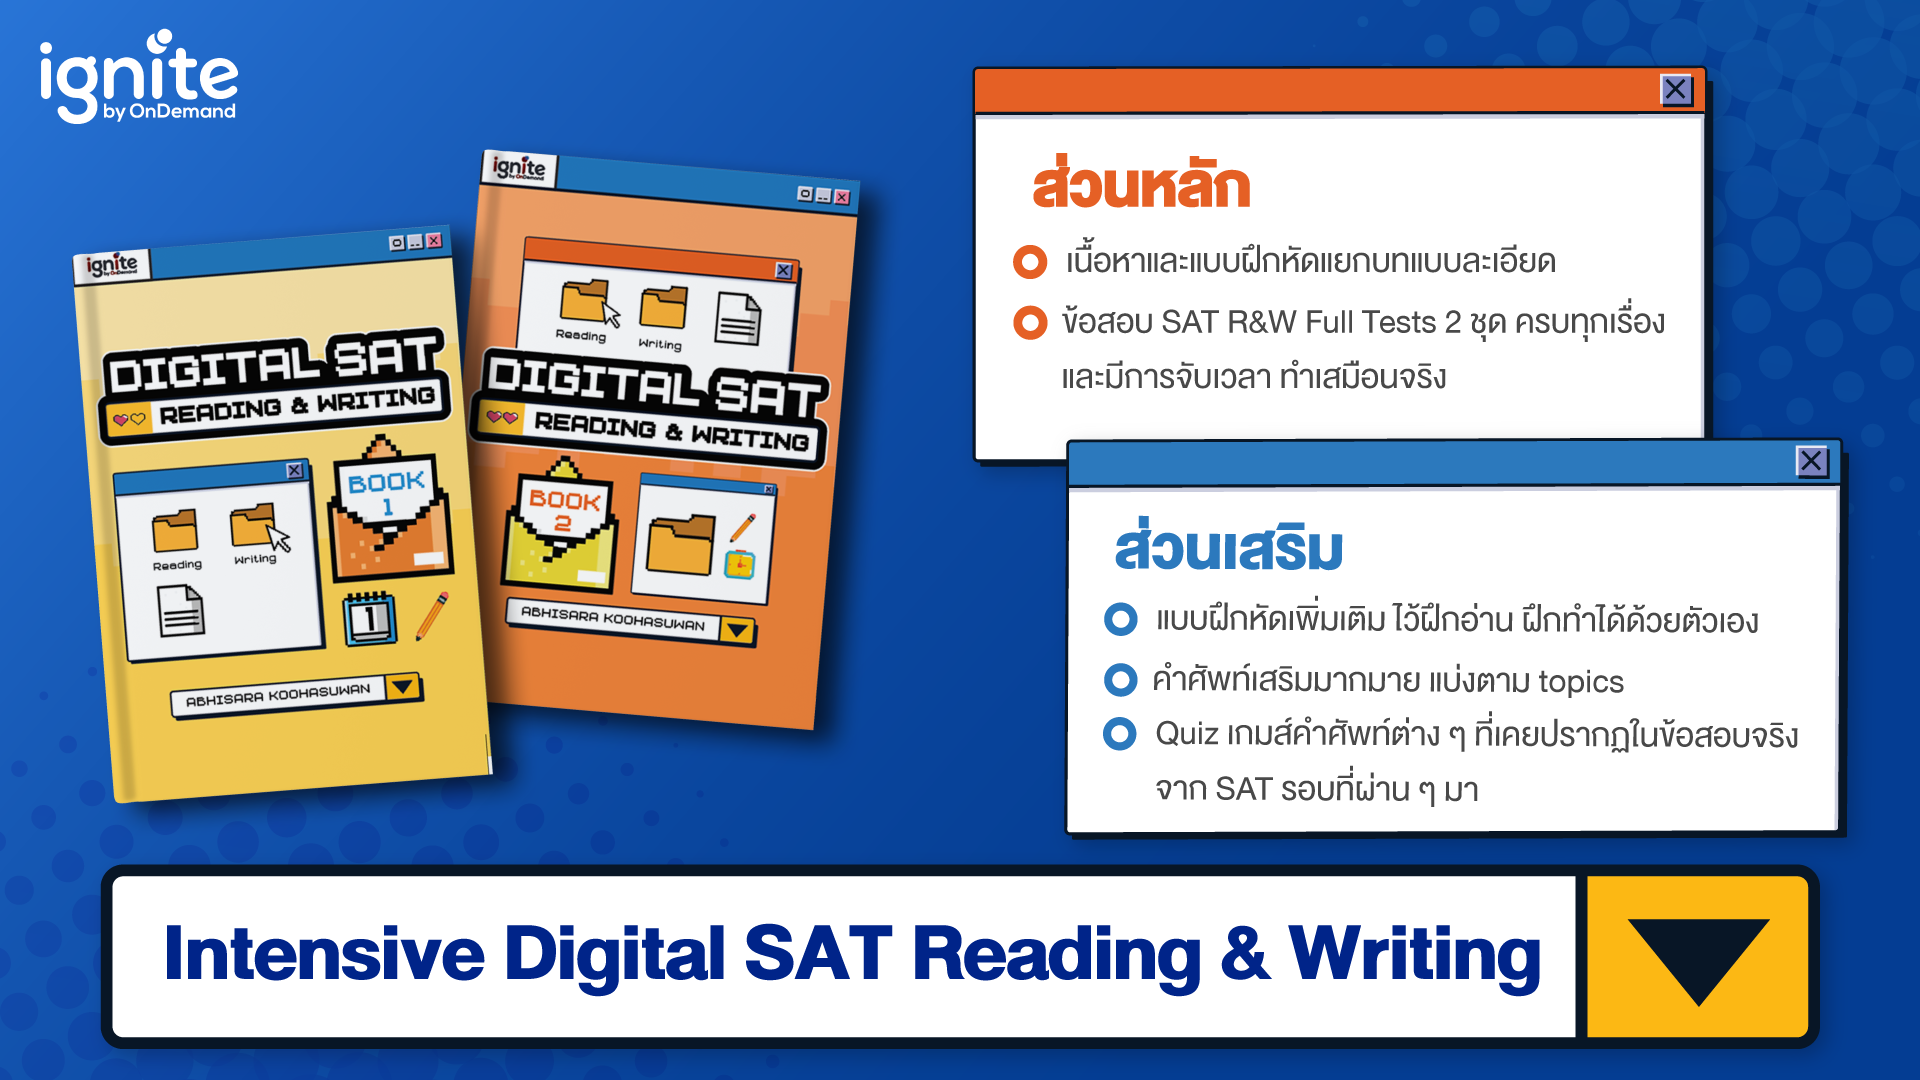 Intensive Digital SAT Reading & Writing - ignite by ondemand